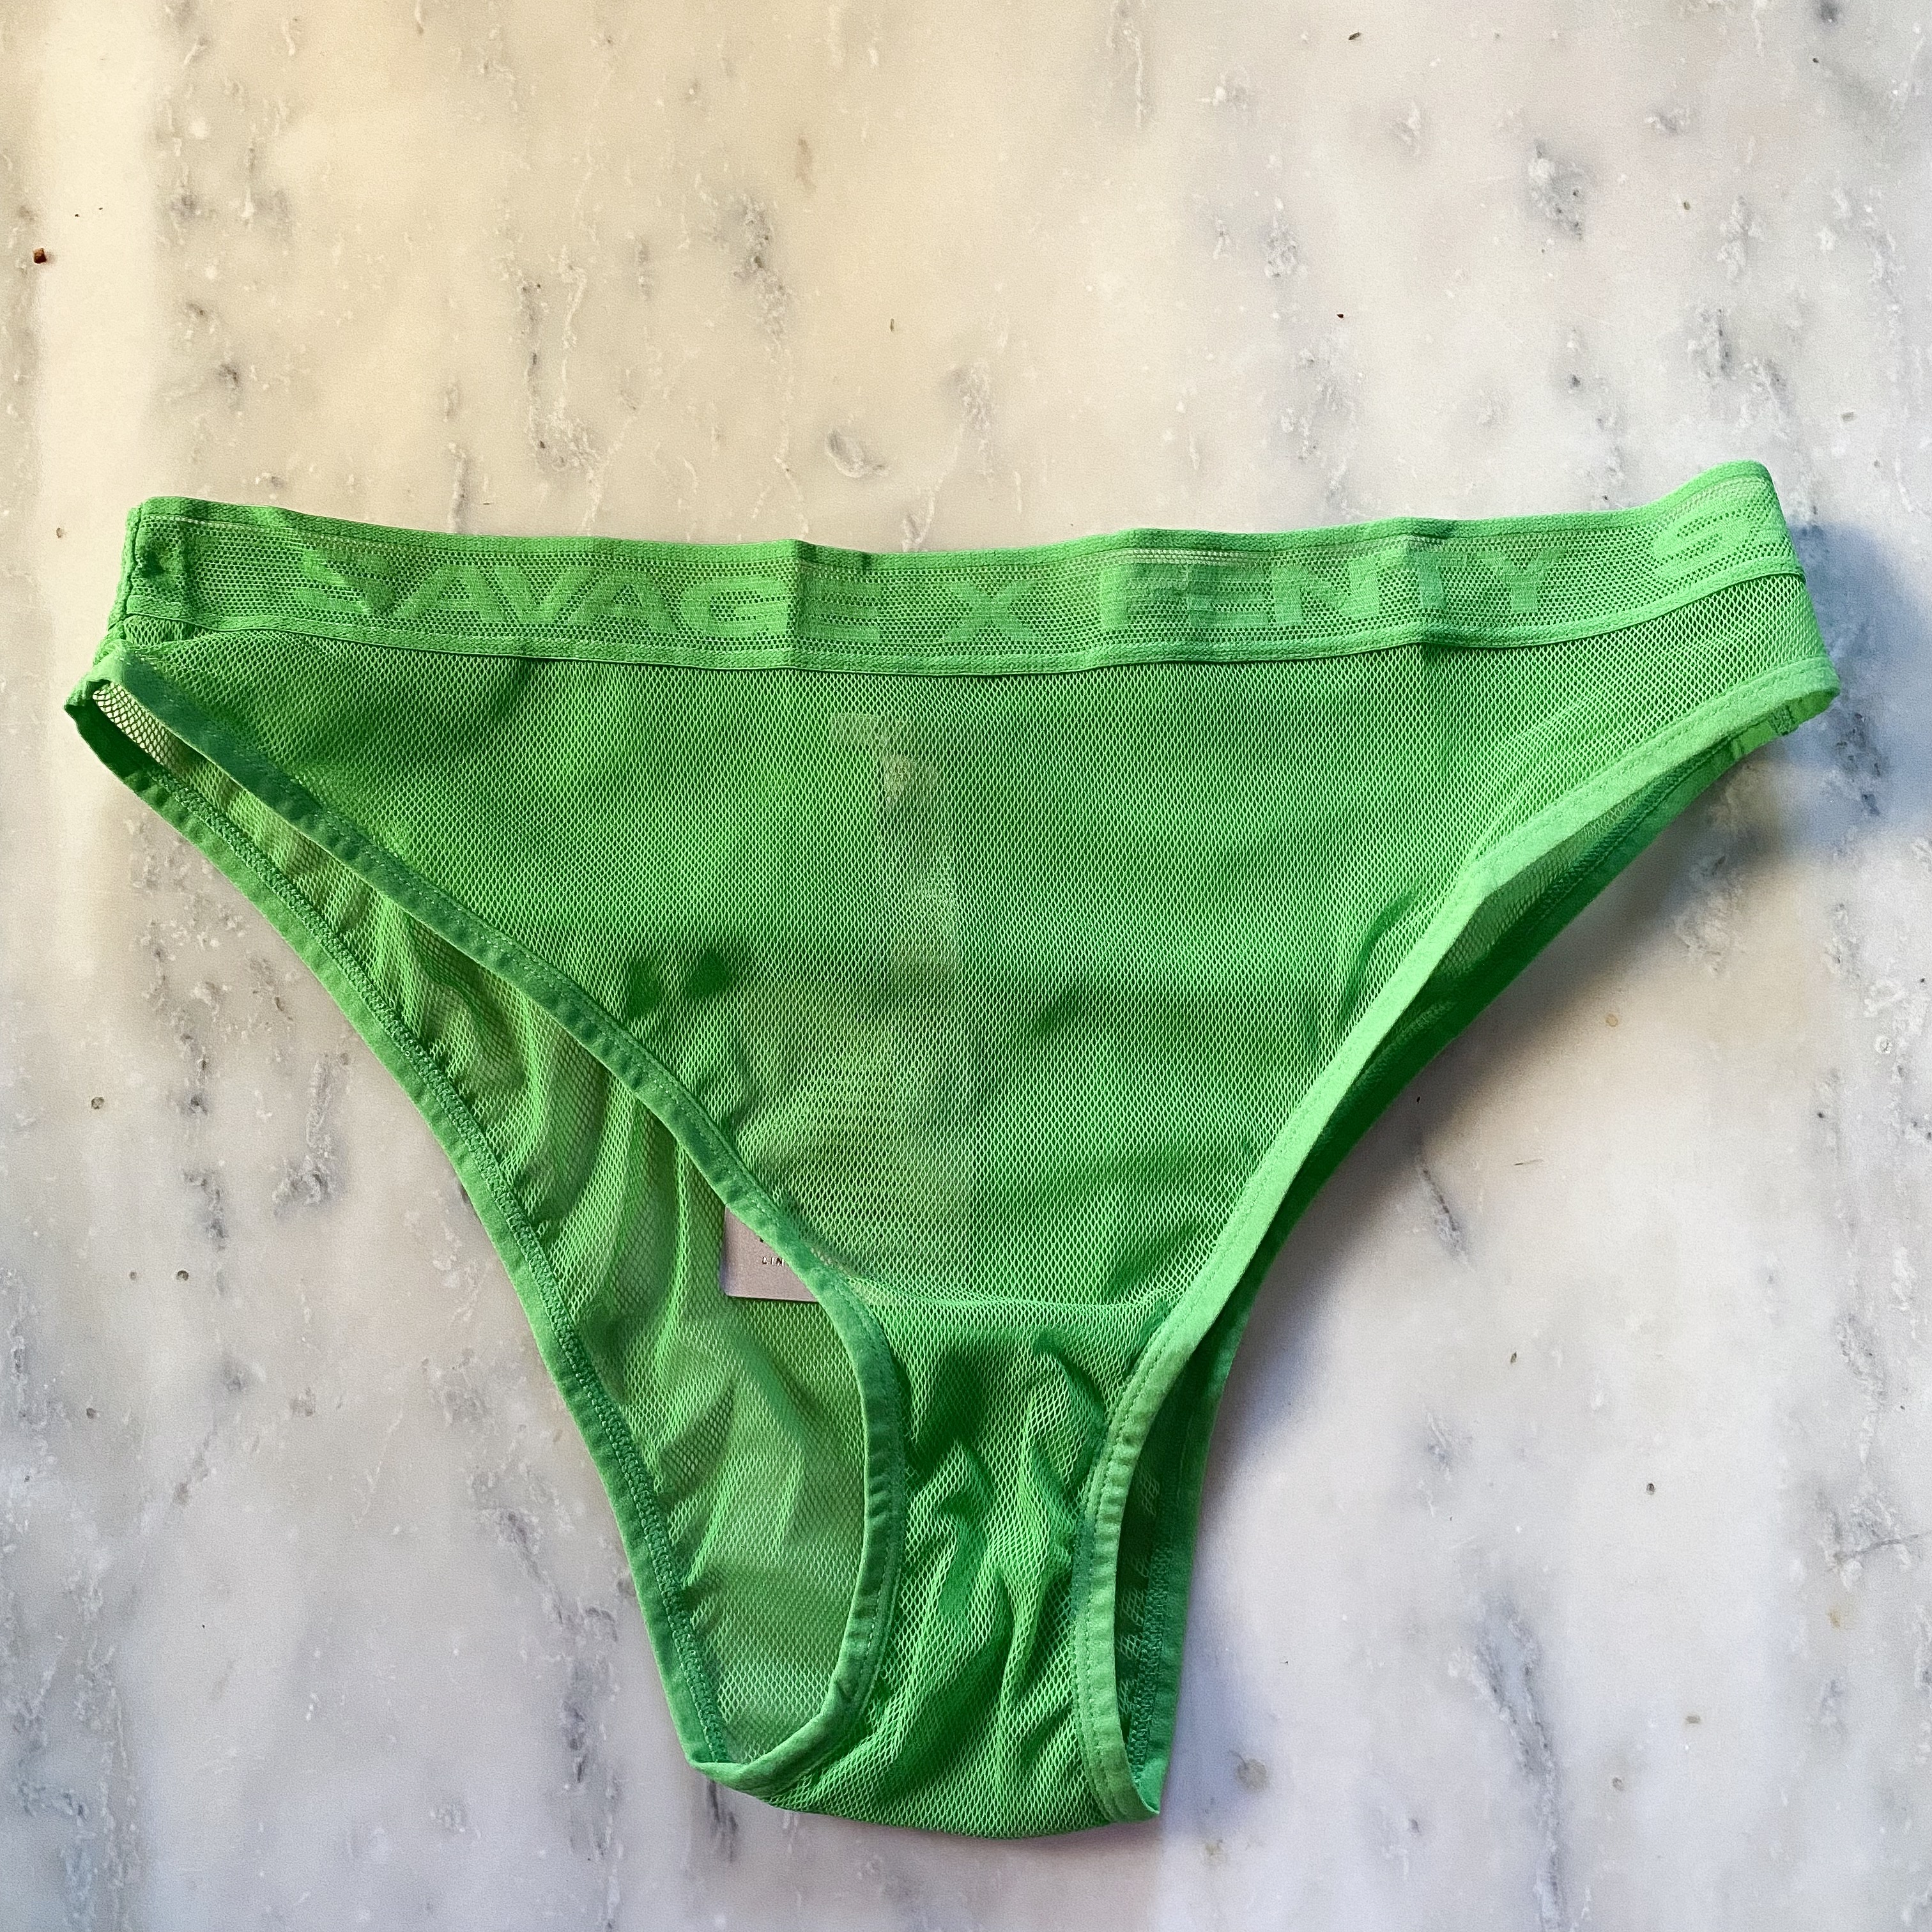 Nothin' But Net High-Leg Bikini in Green